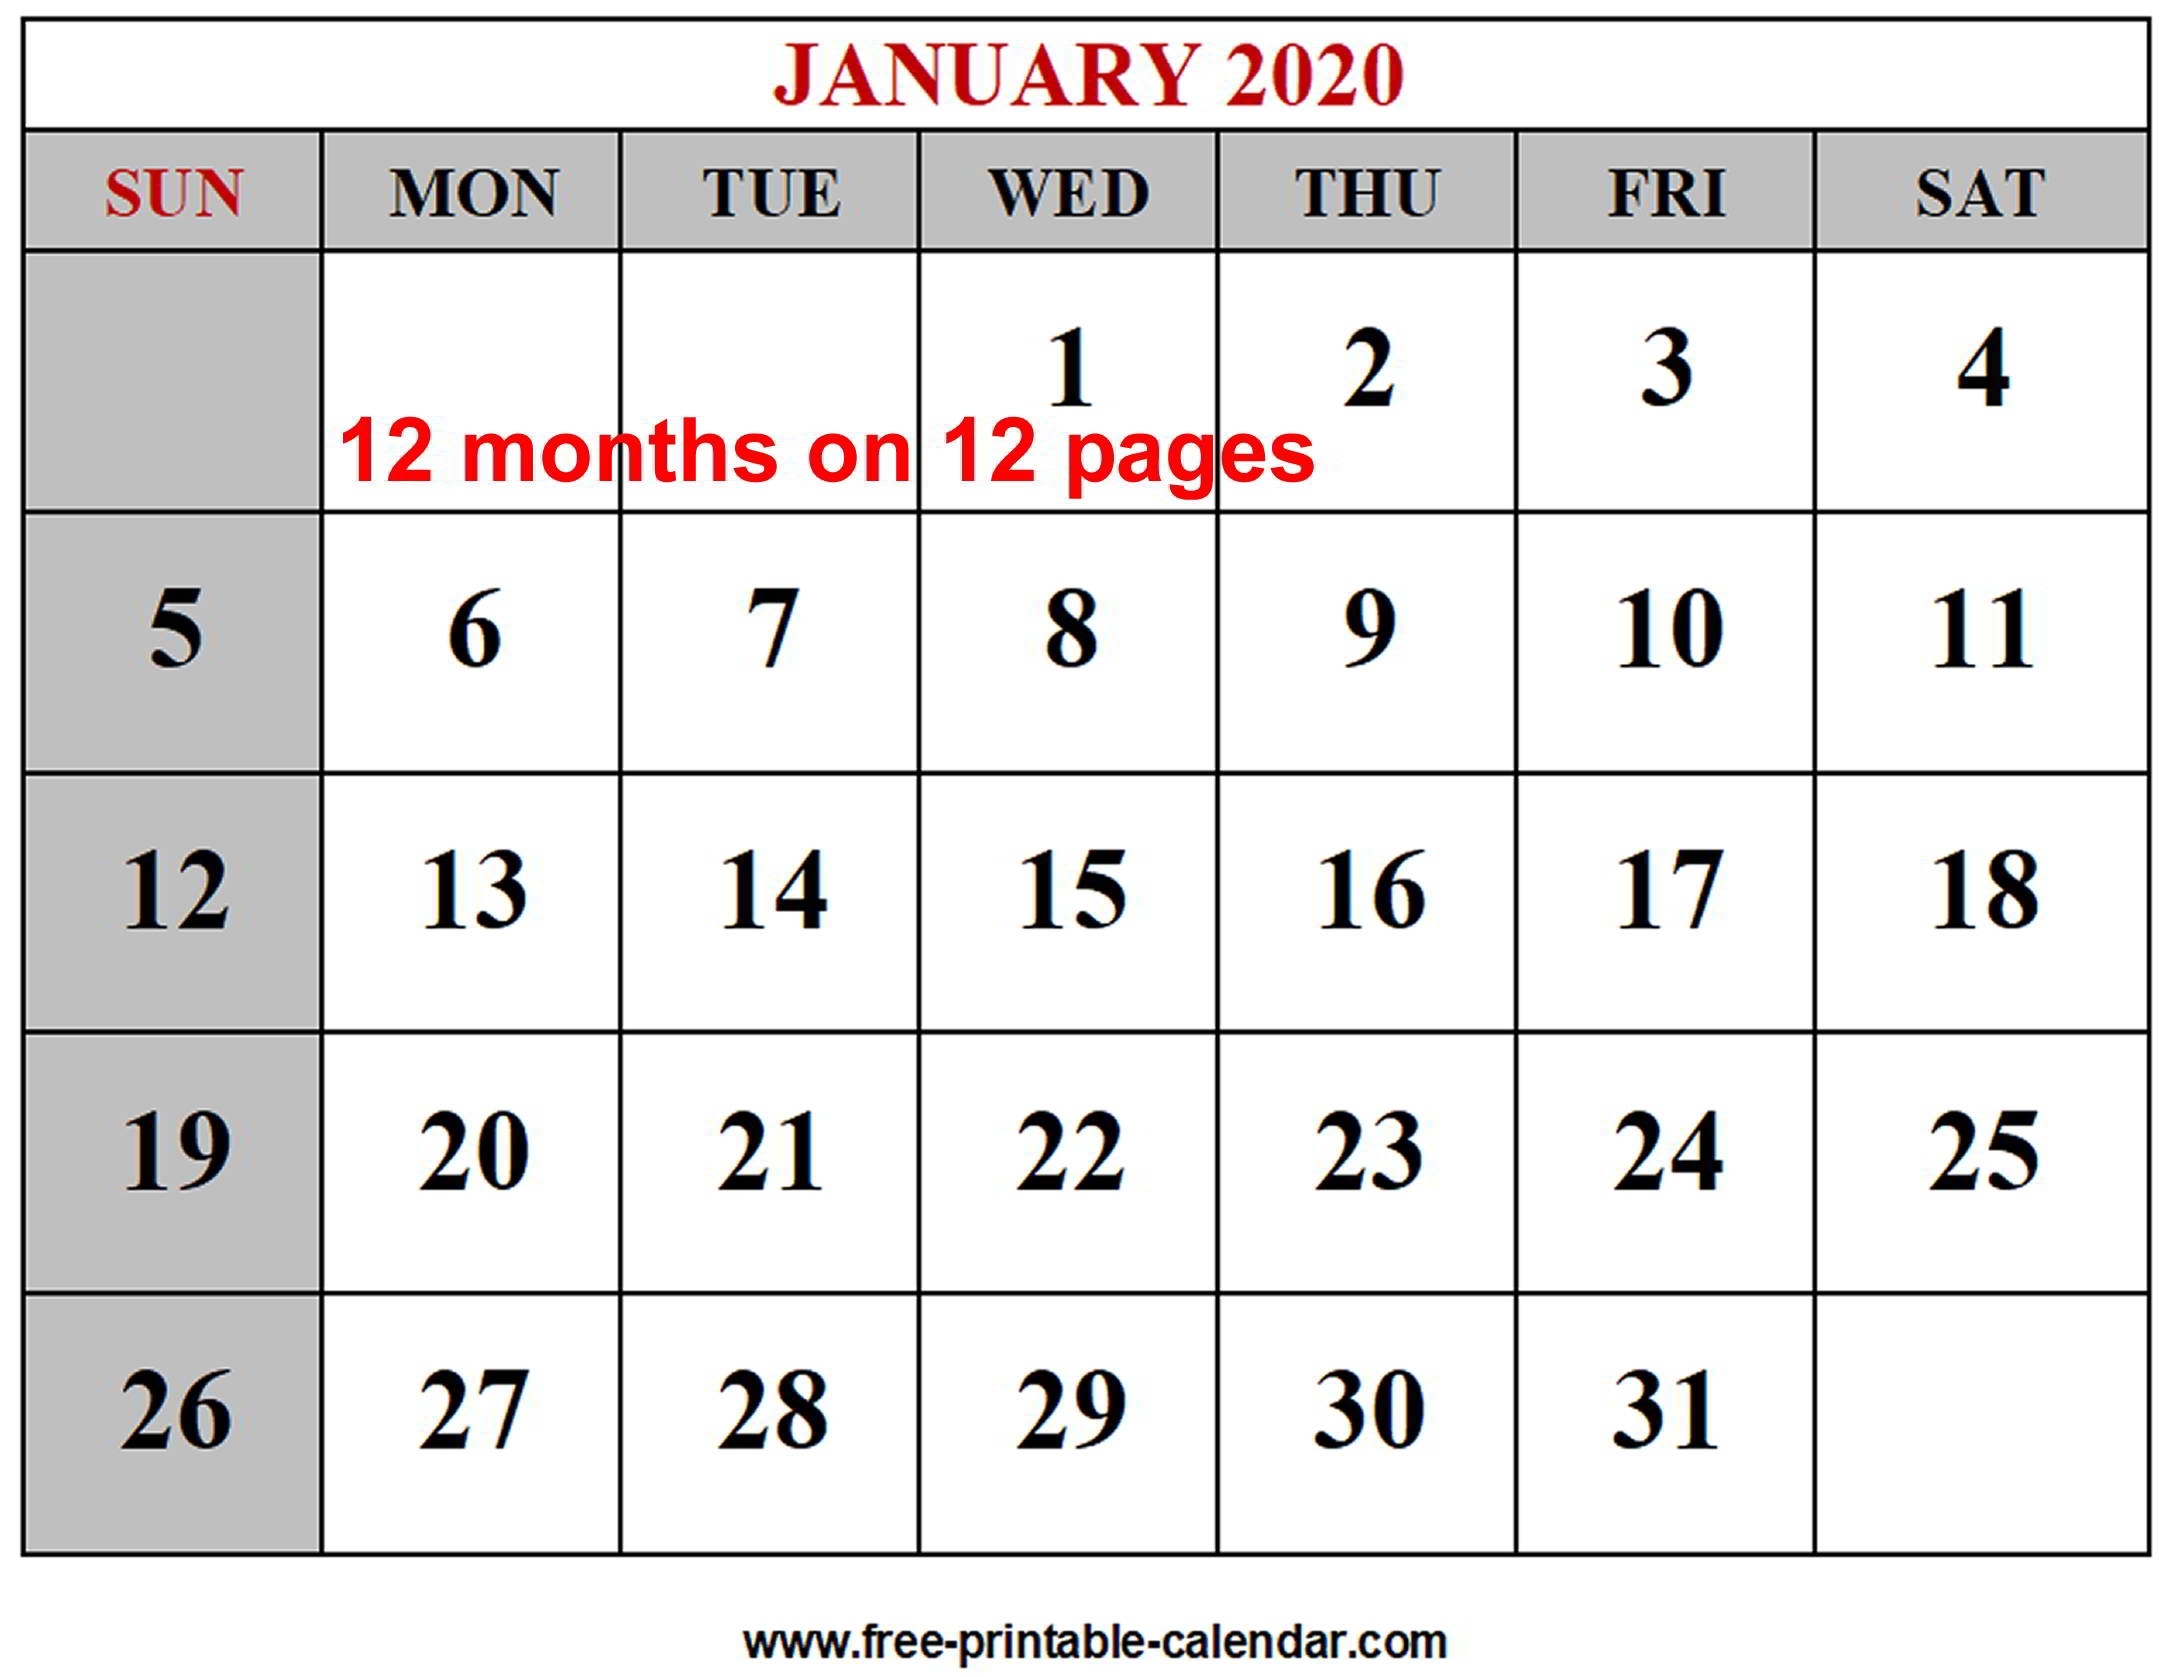 Year 2020 Calendar Templates - Free-Printable-Calendar Free Calendar Html Template